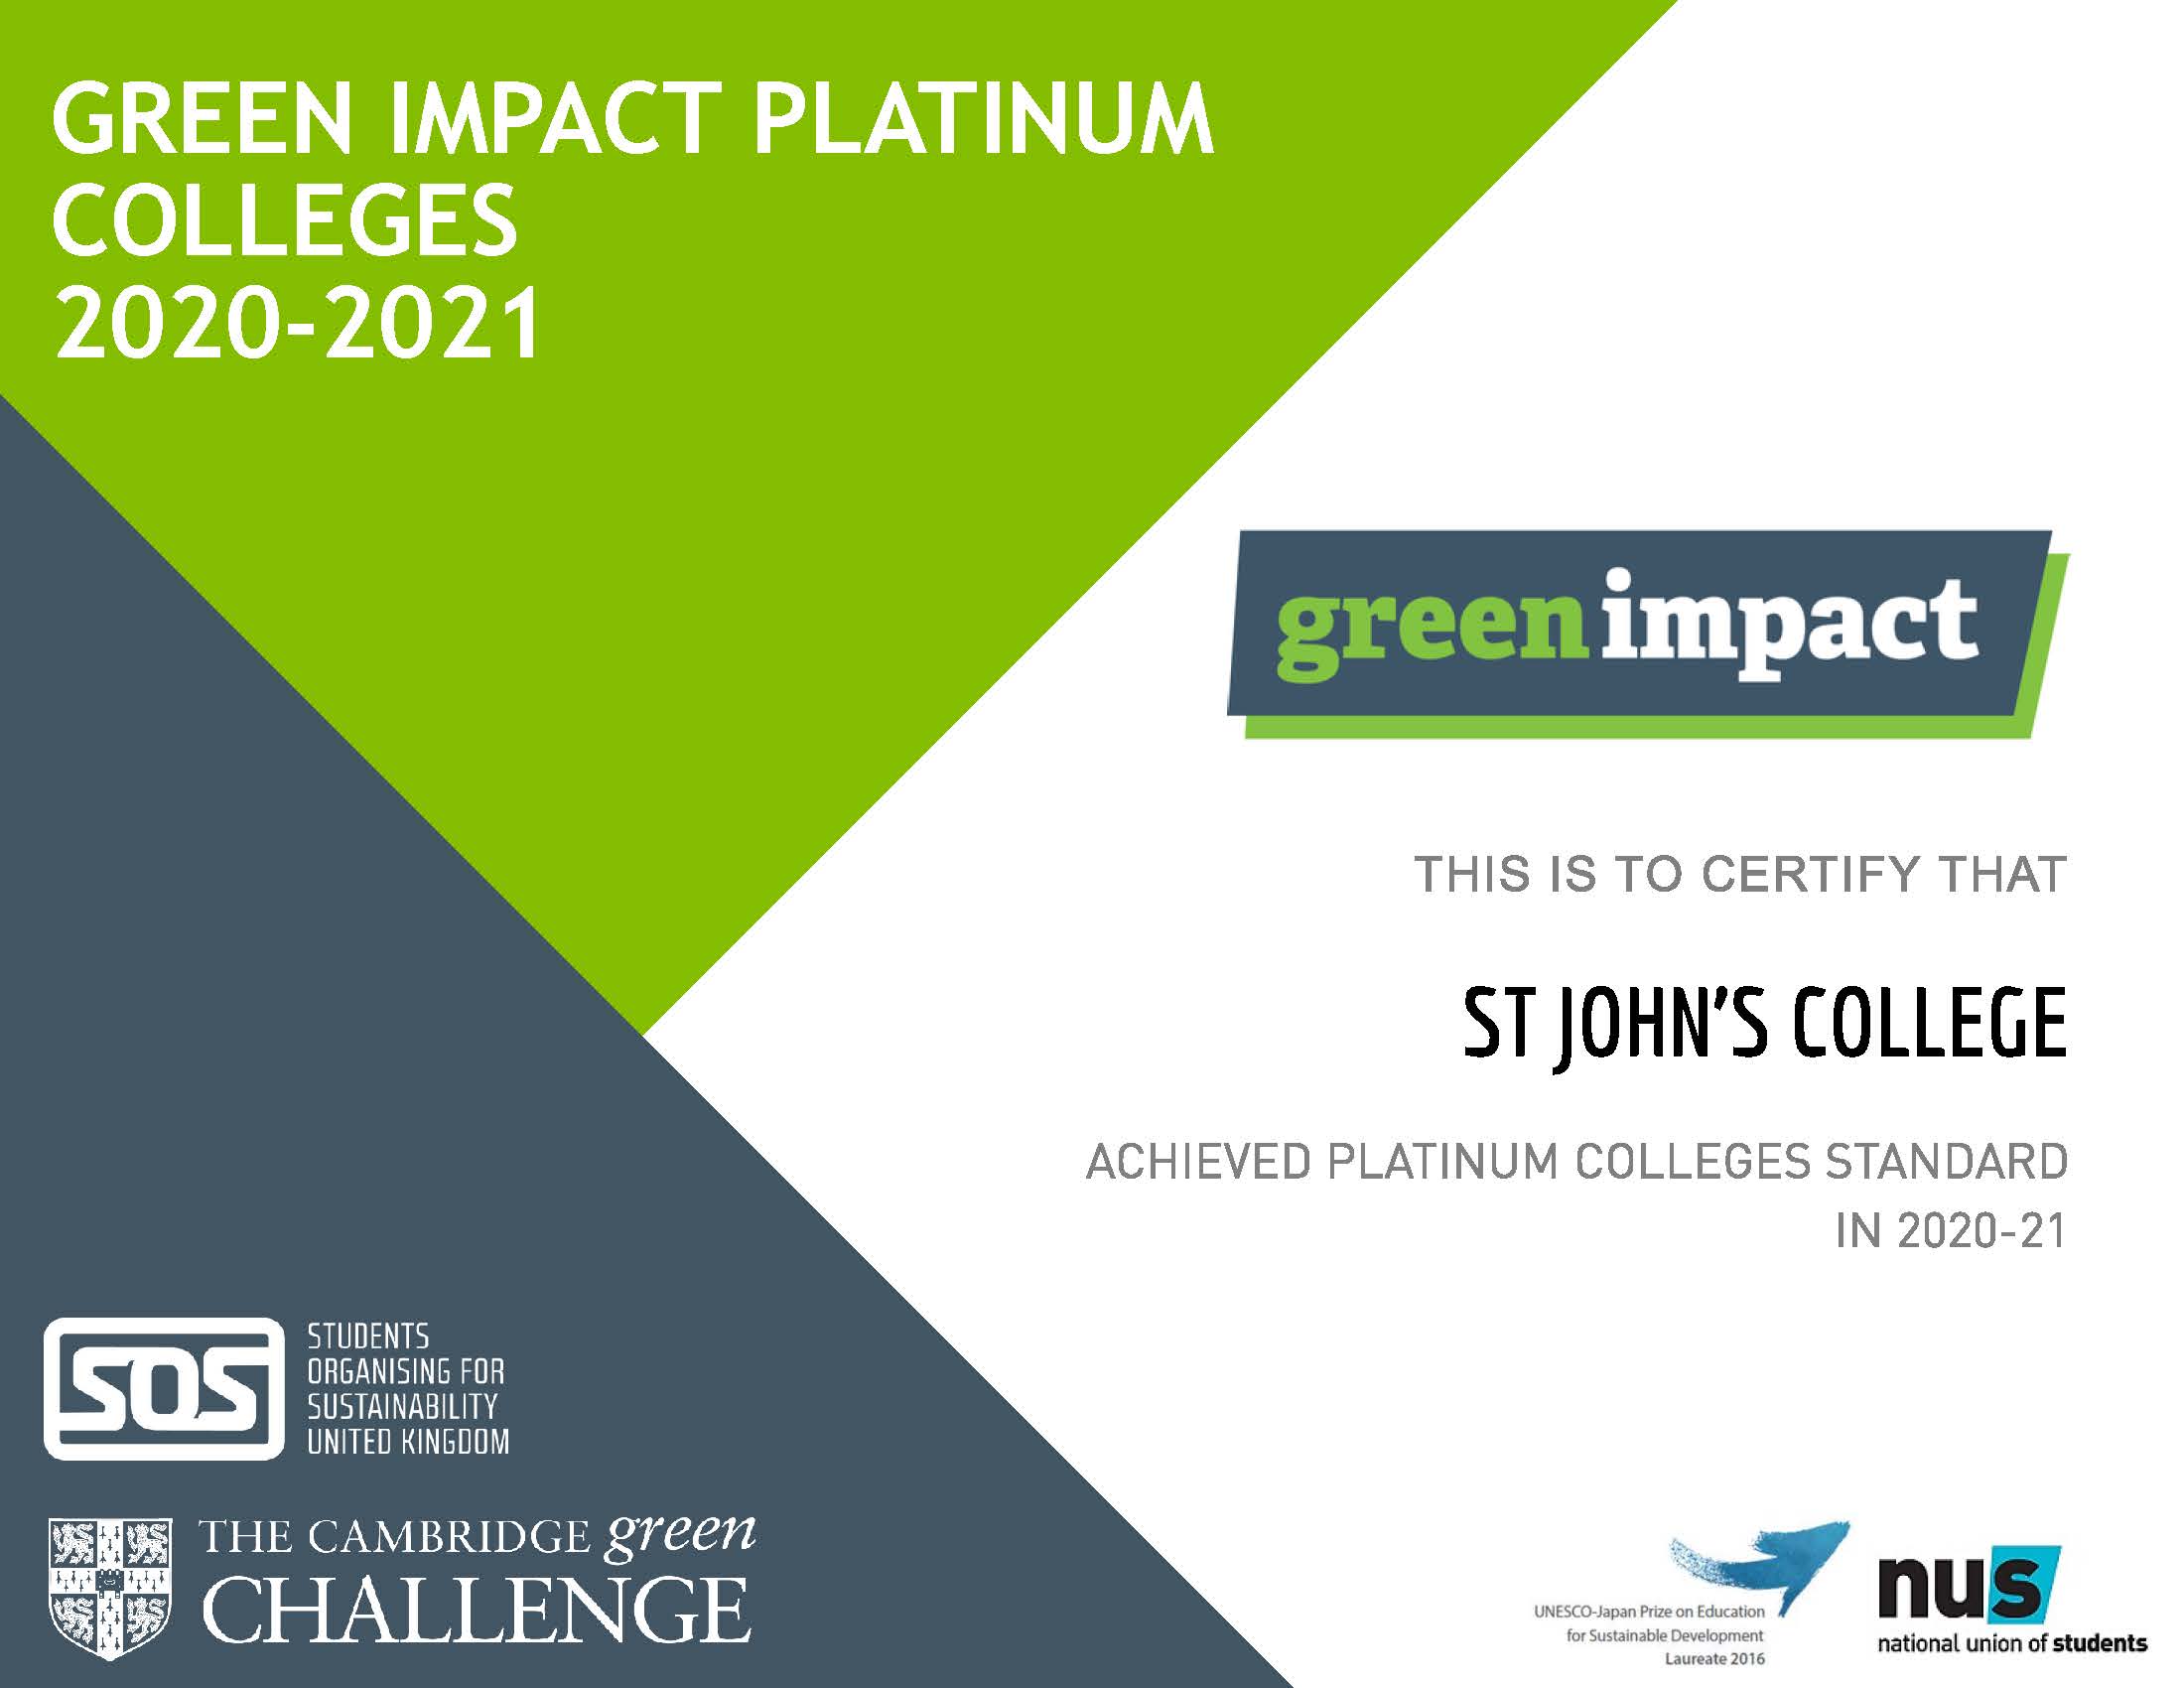 Green Impact Platinum award